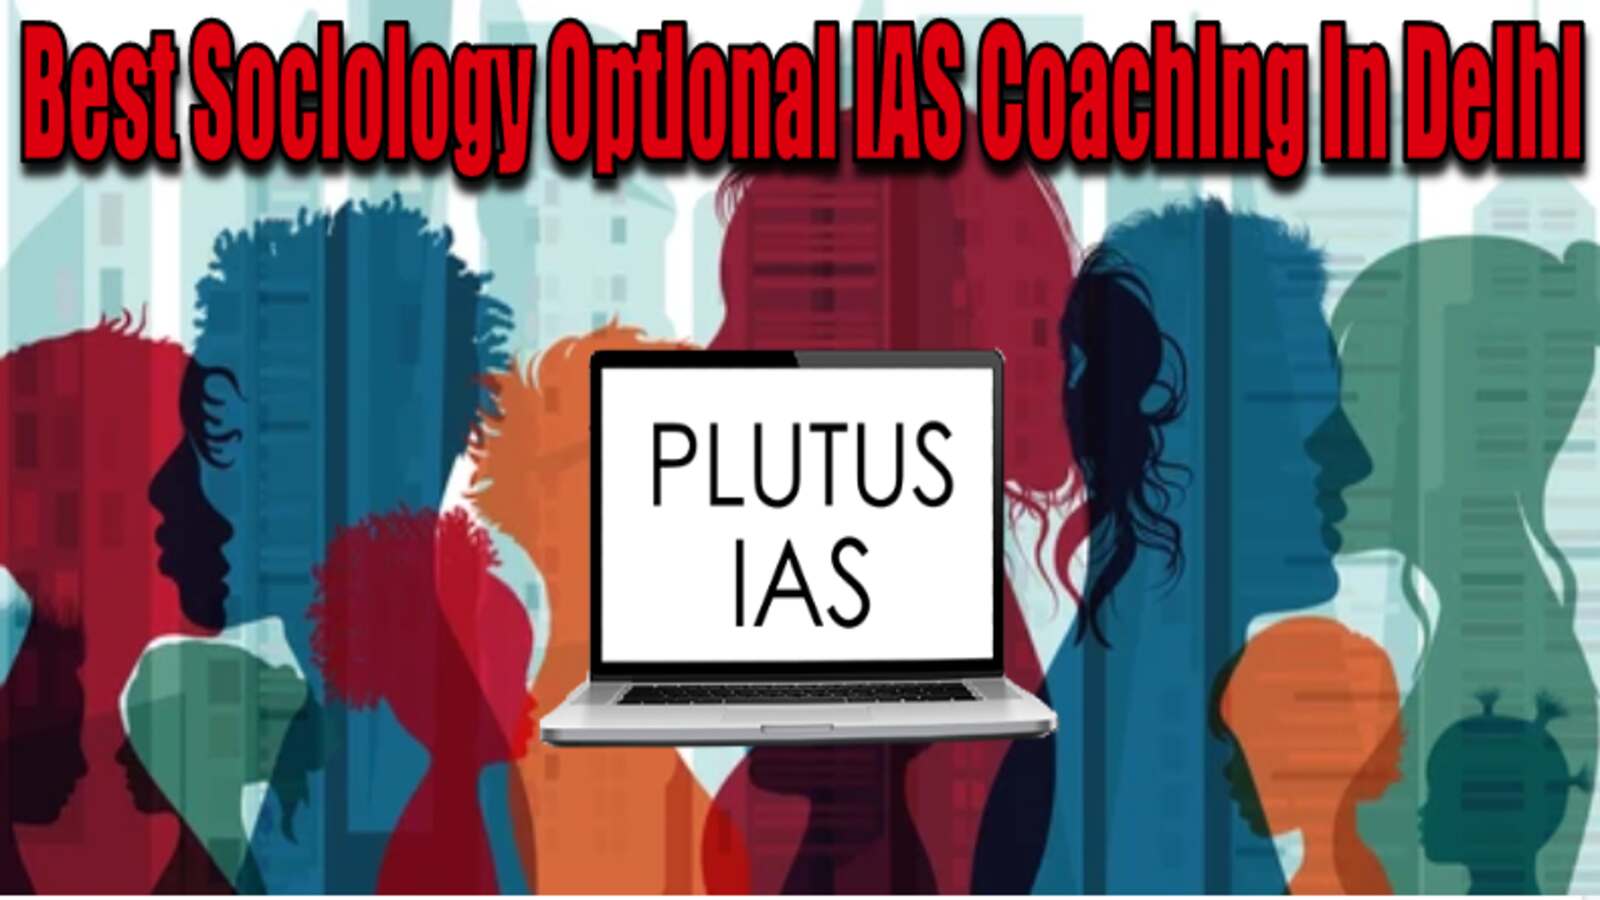 Best Sociology Optional IAS Coaching in Delhi 2023